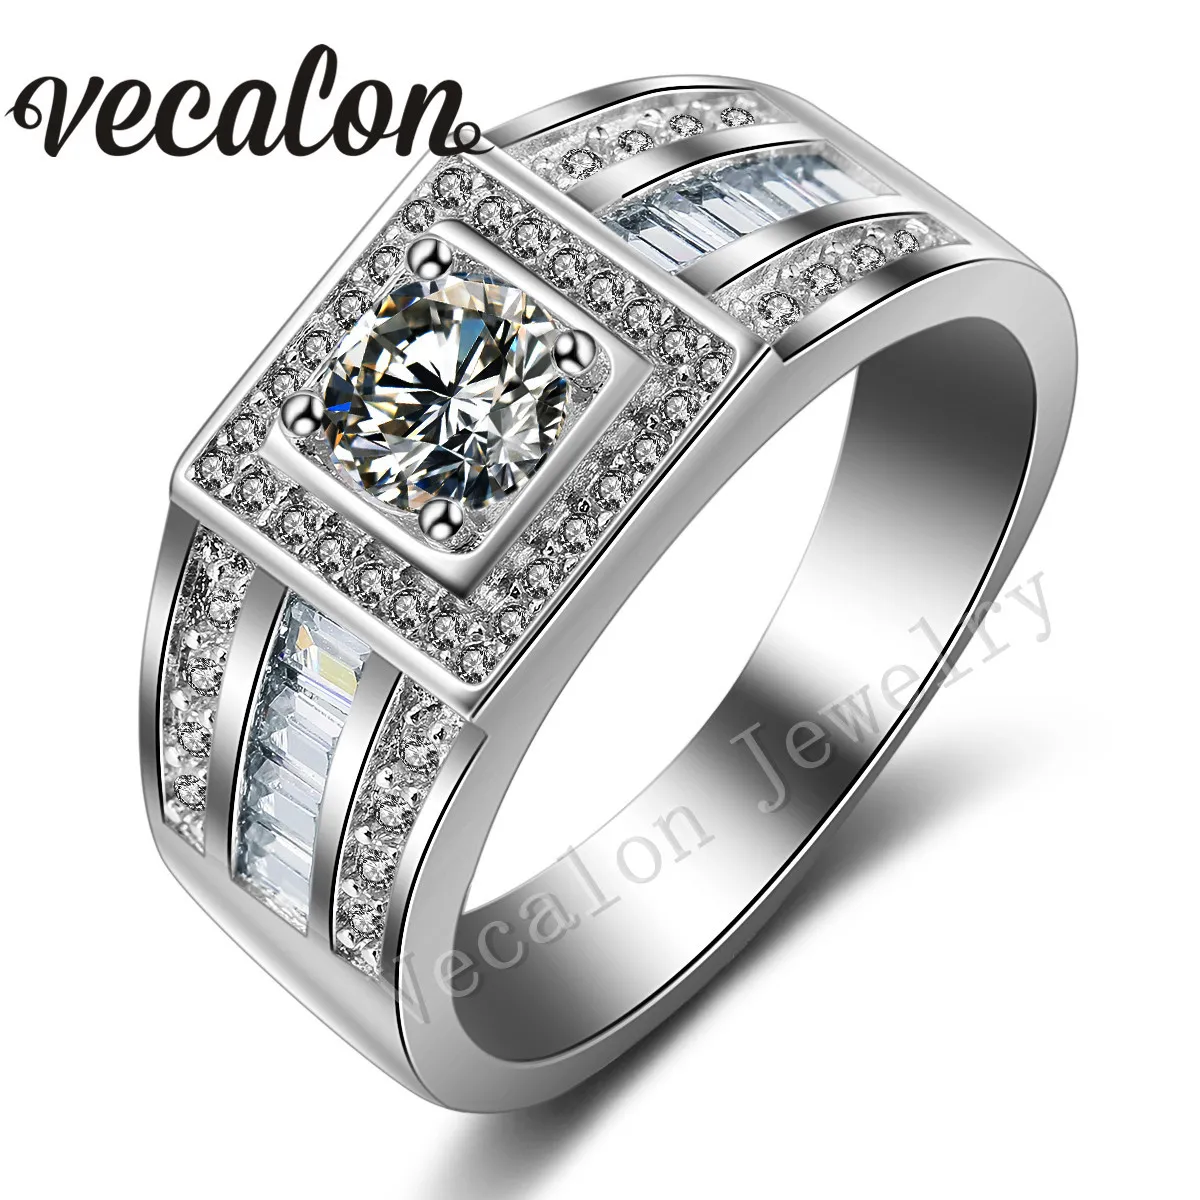 Vecalon 패션 남자 약혼 밴드 솔리테어 1ct CZ 시뮬레이션 다이아몬드 반지 10kt 화이트 골드 가득한 결혼 반지 7-13